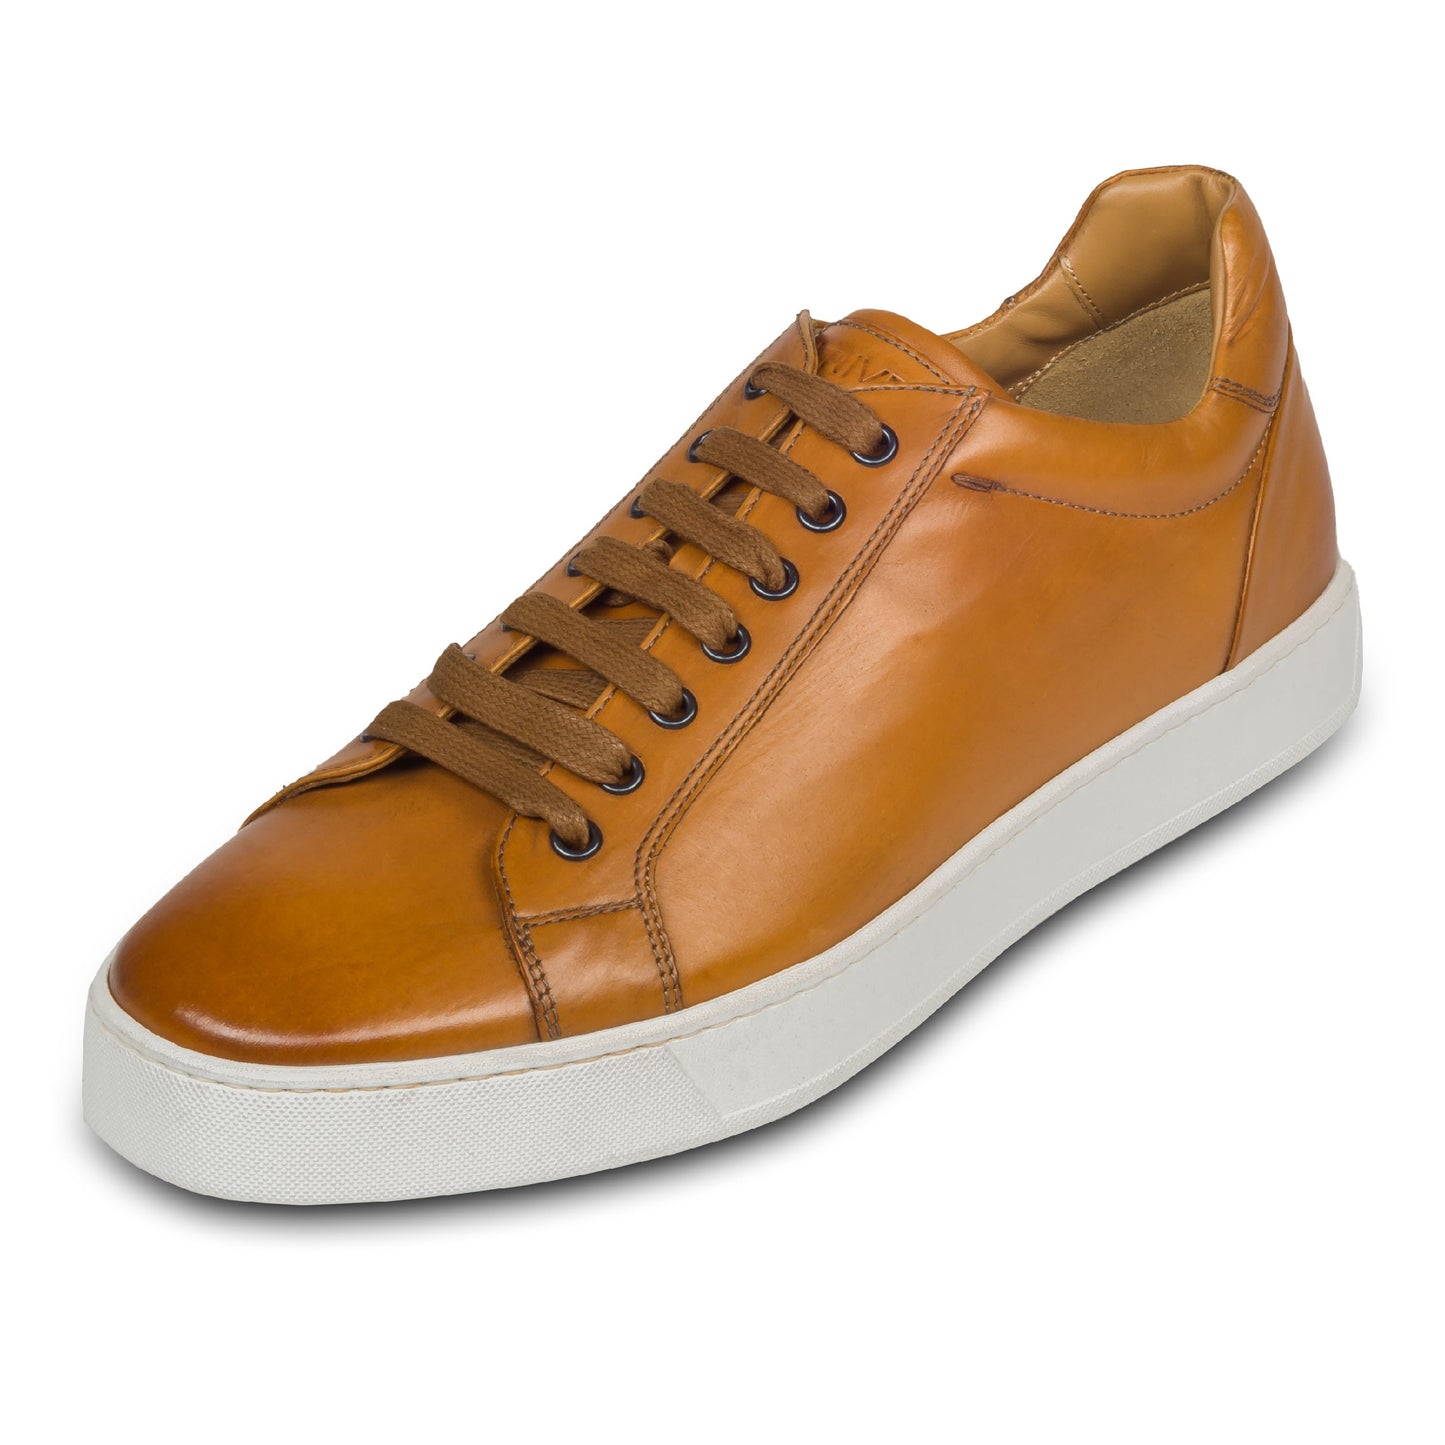 Triverflight – Italienische Herren-Sneaker cognac-braun. Aus Kalbsleder handgefertigt. Schräge Ansicht linker Schuh.